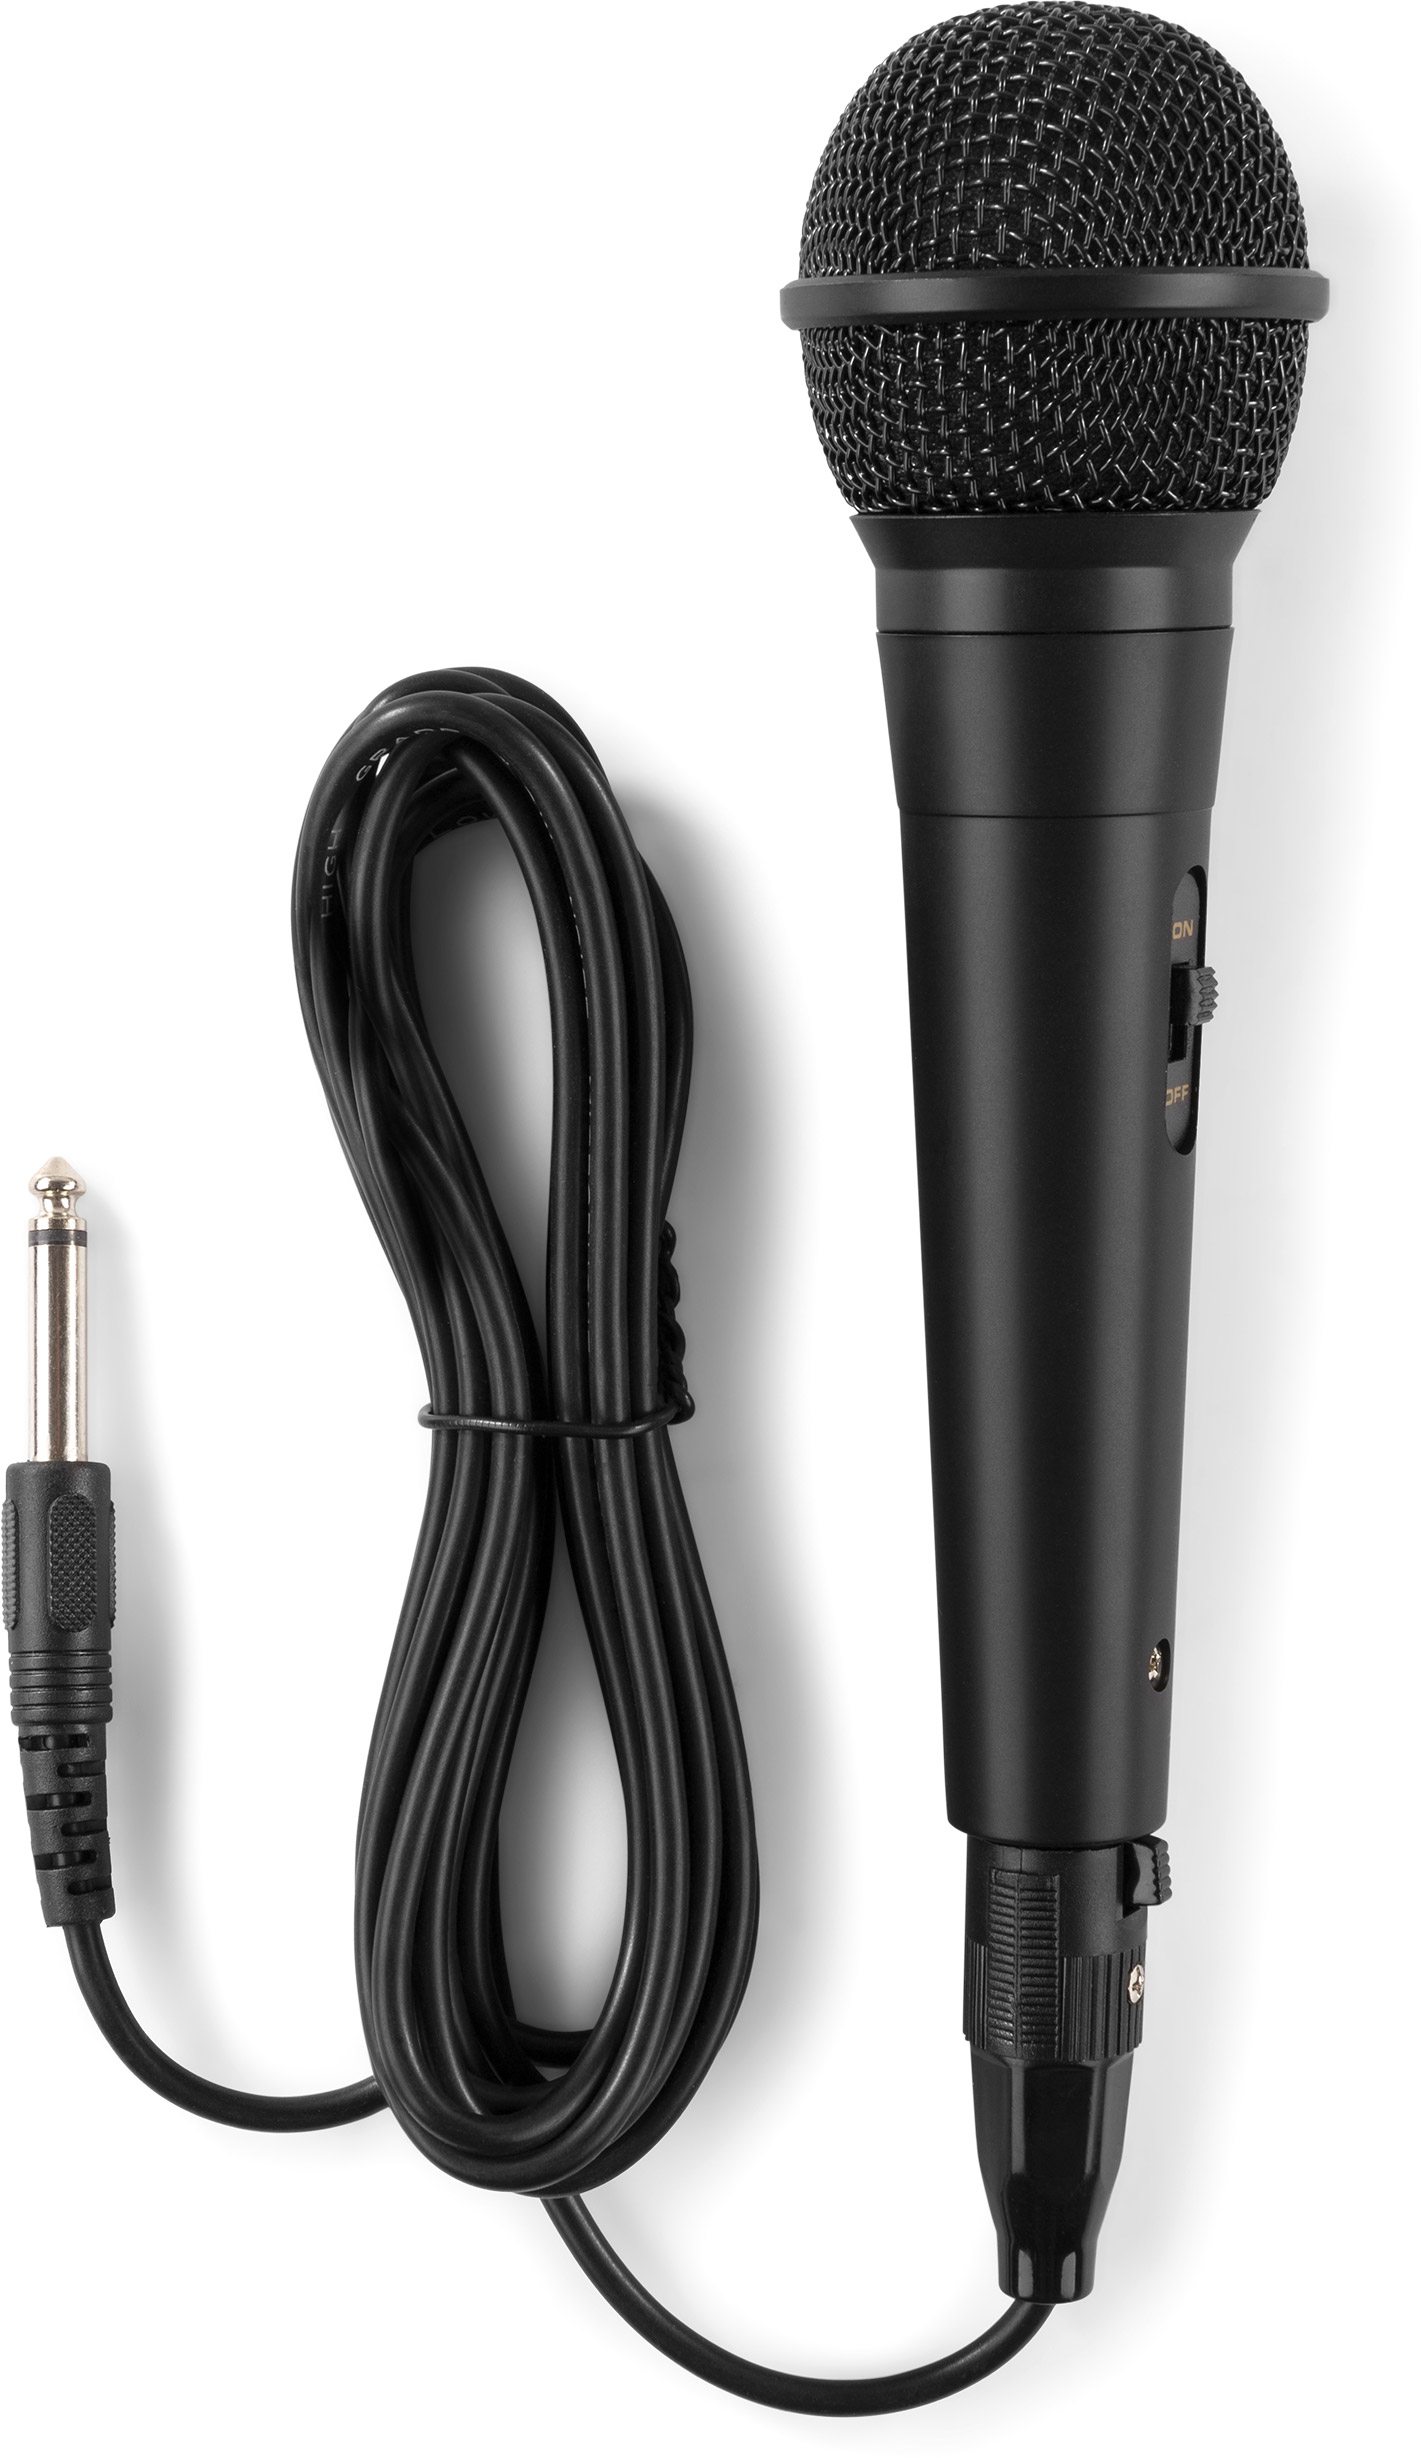 Enceinte Karaoké Vonyx SBS50W - Microphone, Bluetooth et effet